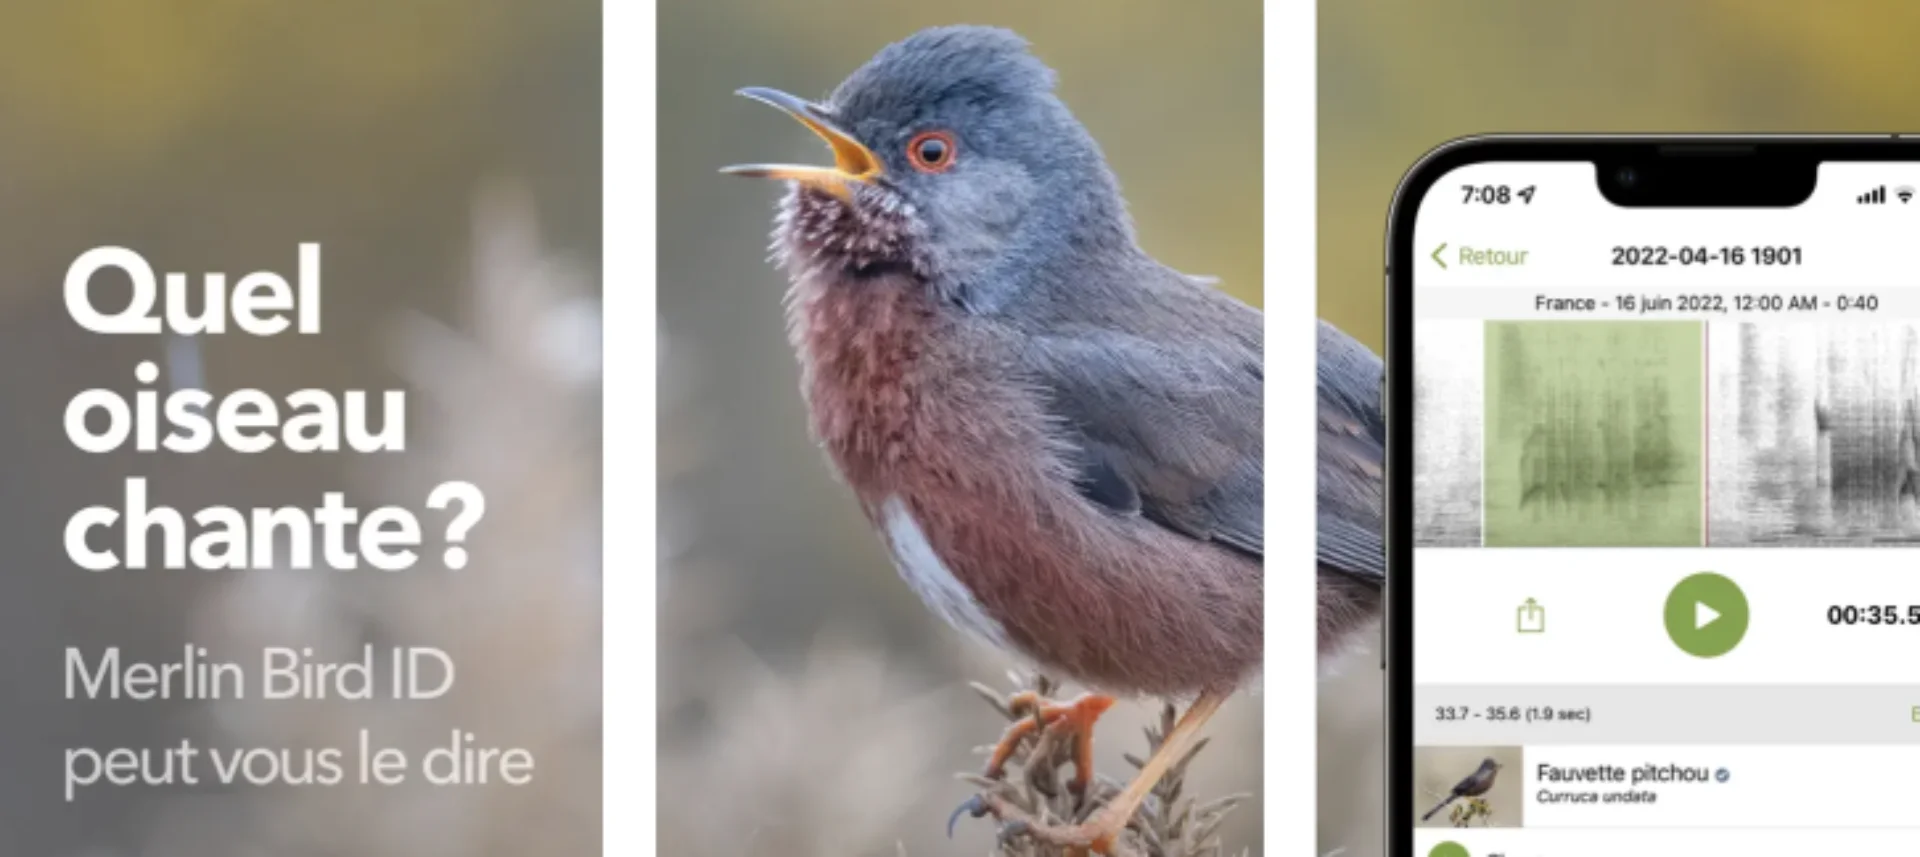 How to Identify Birds Using Merlin Bird ID